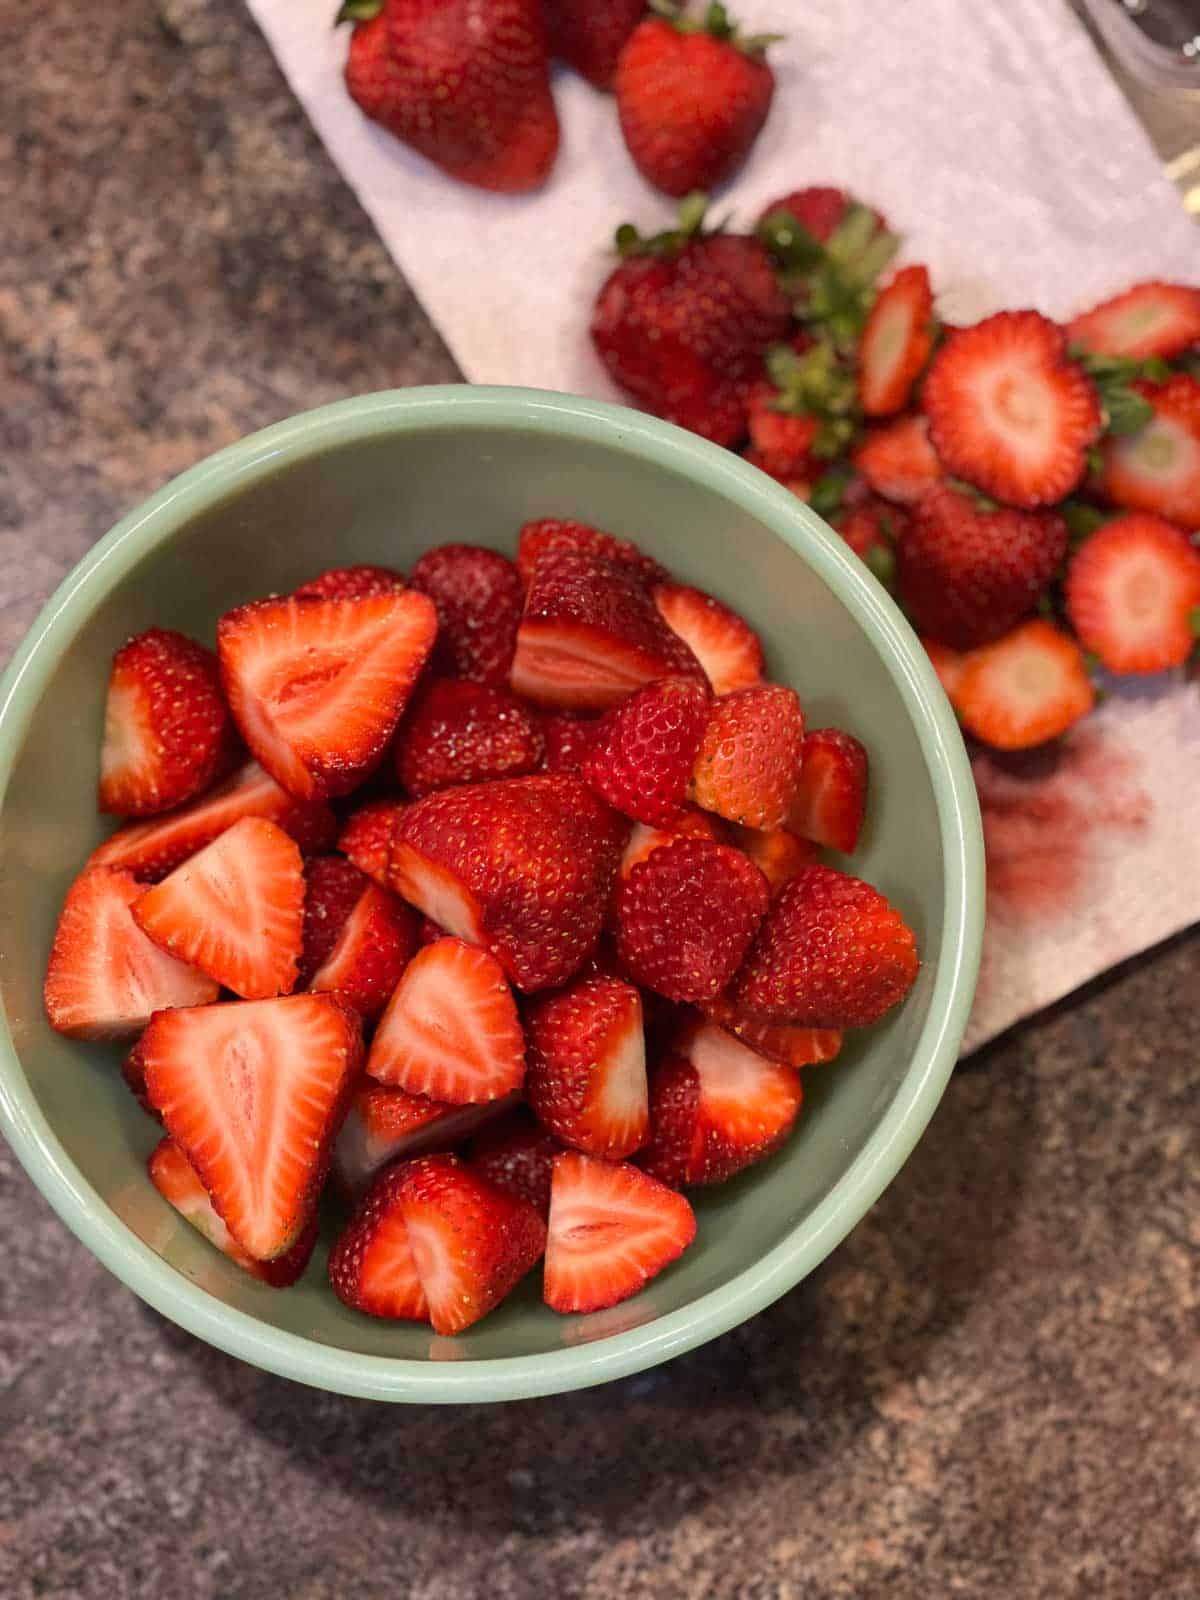 Strawberry Glaze Recipe Instructions